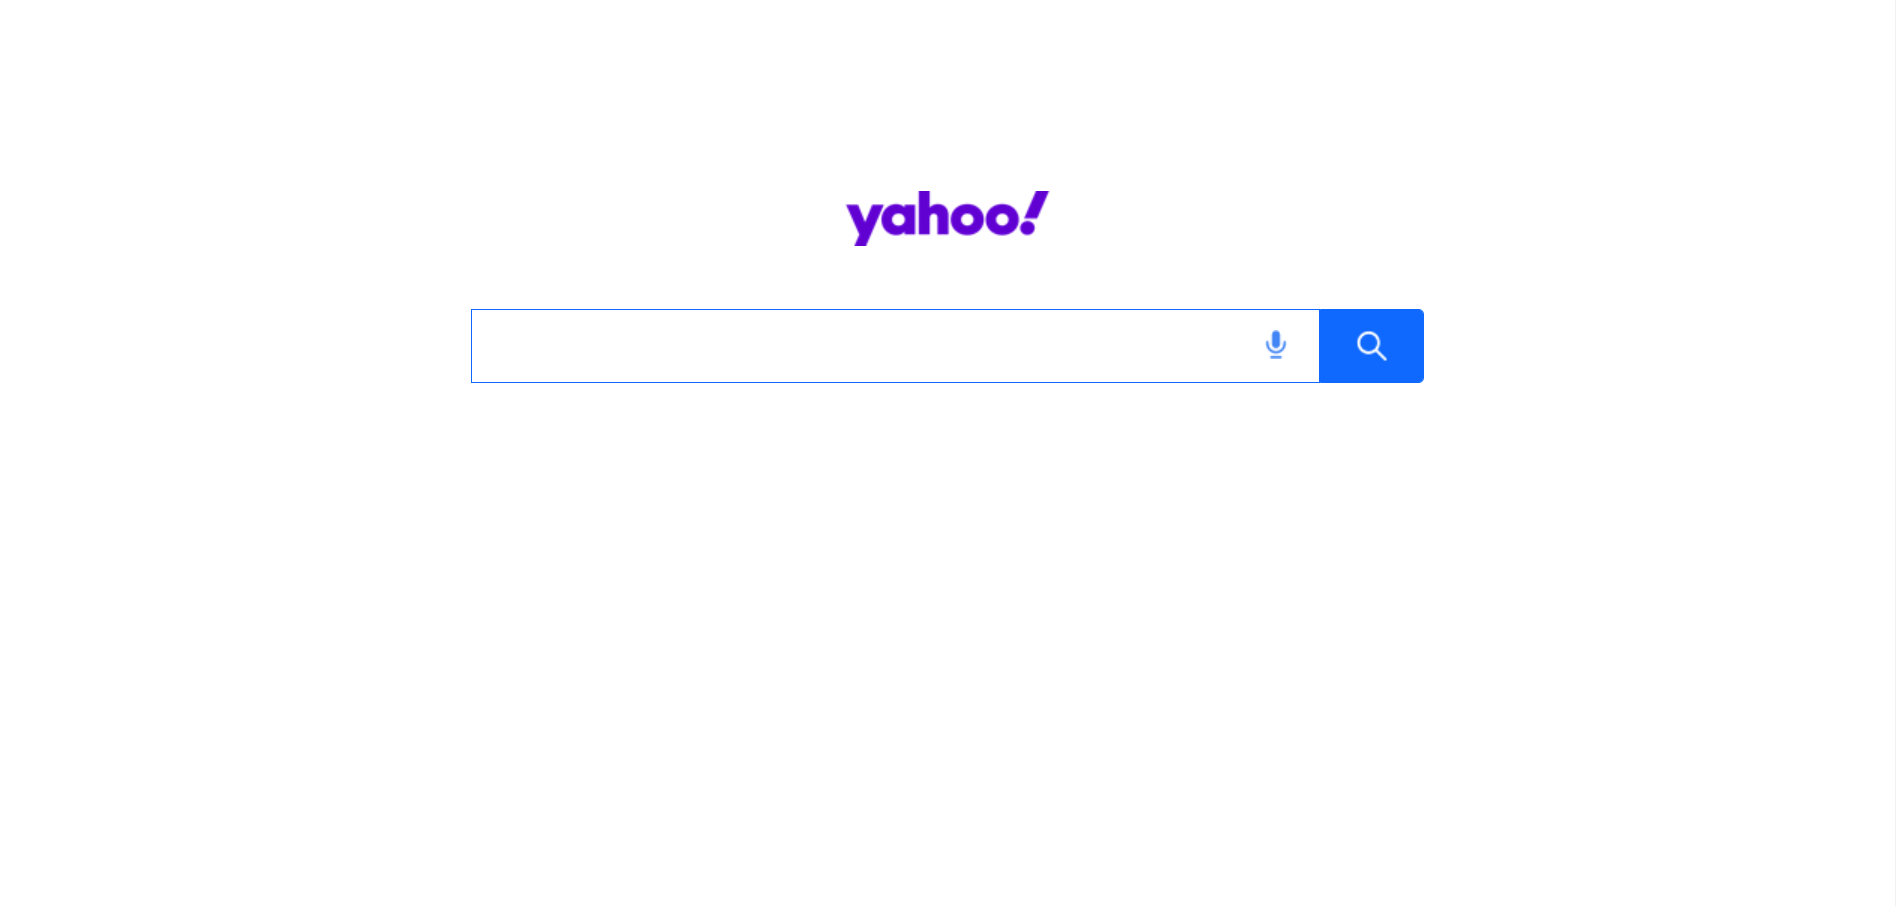 Buscadores aparte de Google: Yahoo!